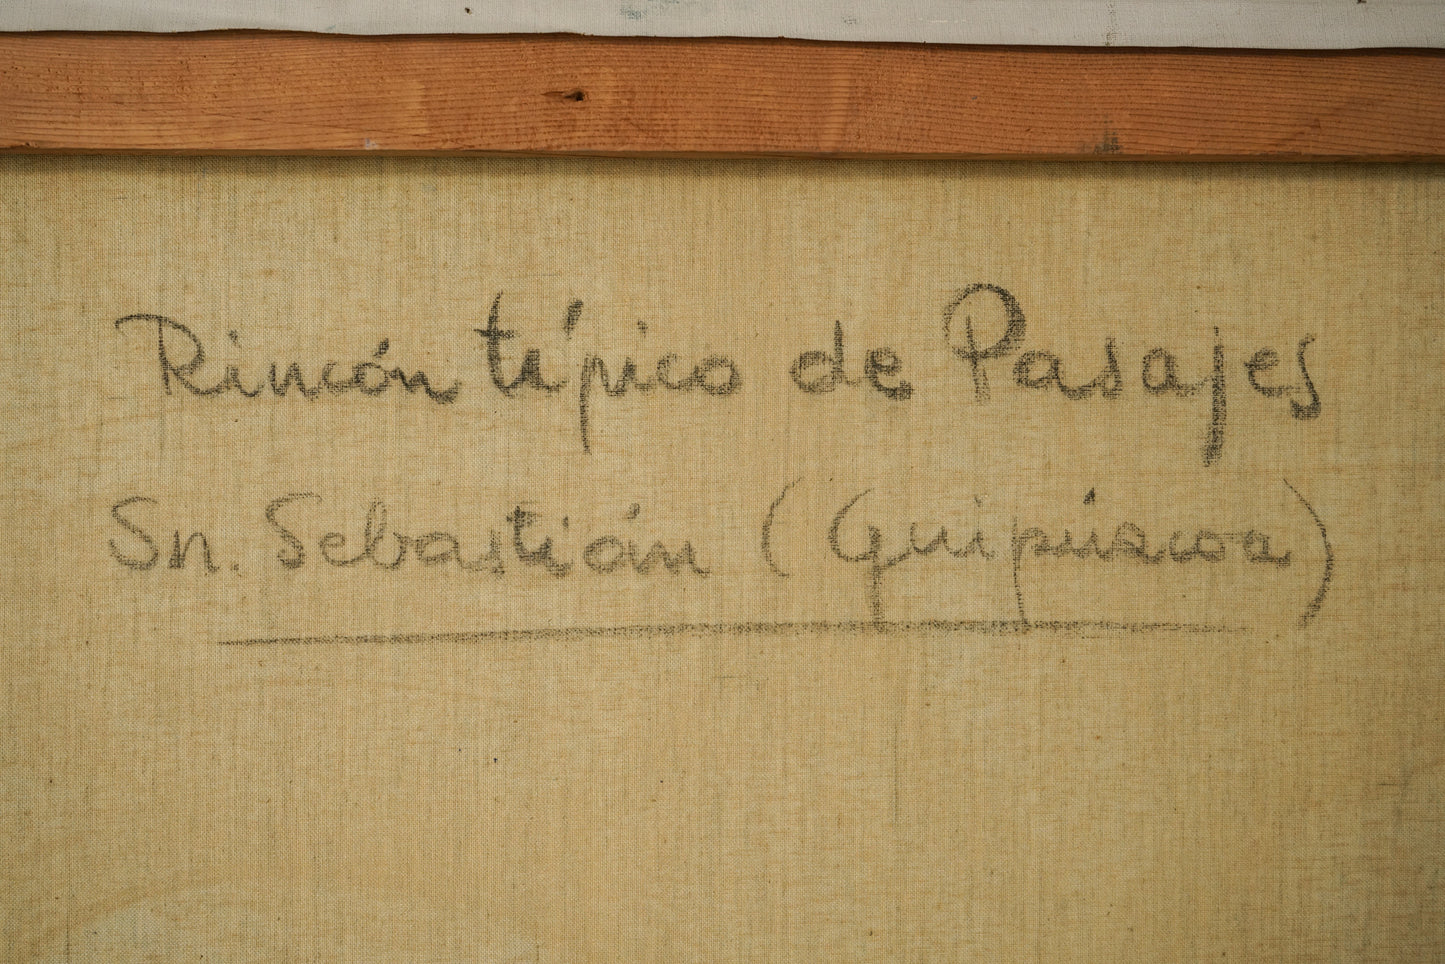 Rincón típico de pasajes san sebastian guipuzcoa - Large Post Impressionist Study